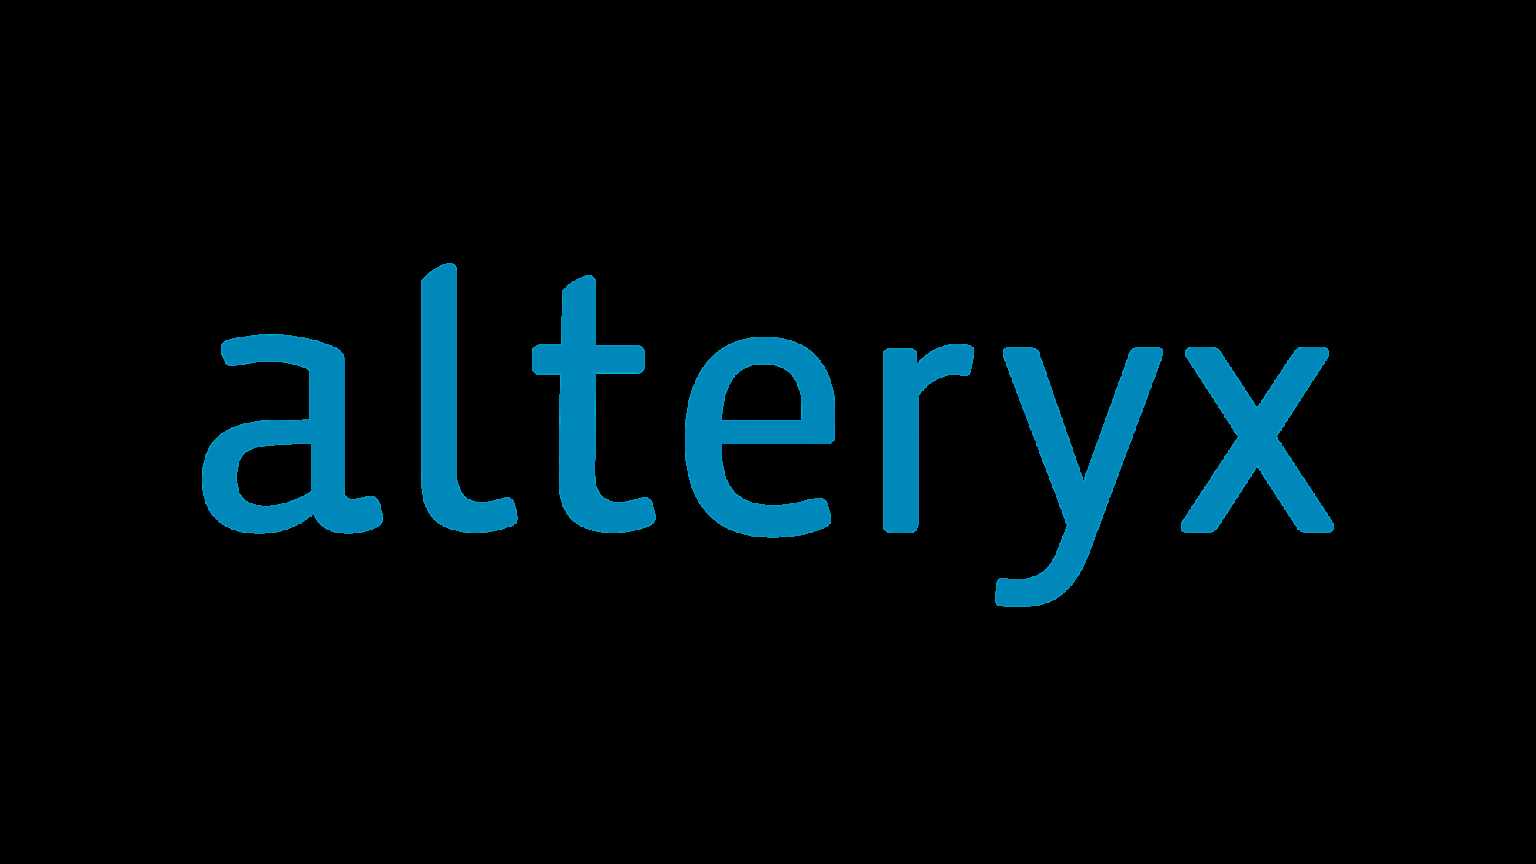 alteryx outlines tech predictions advisory